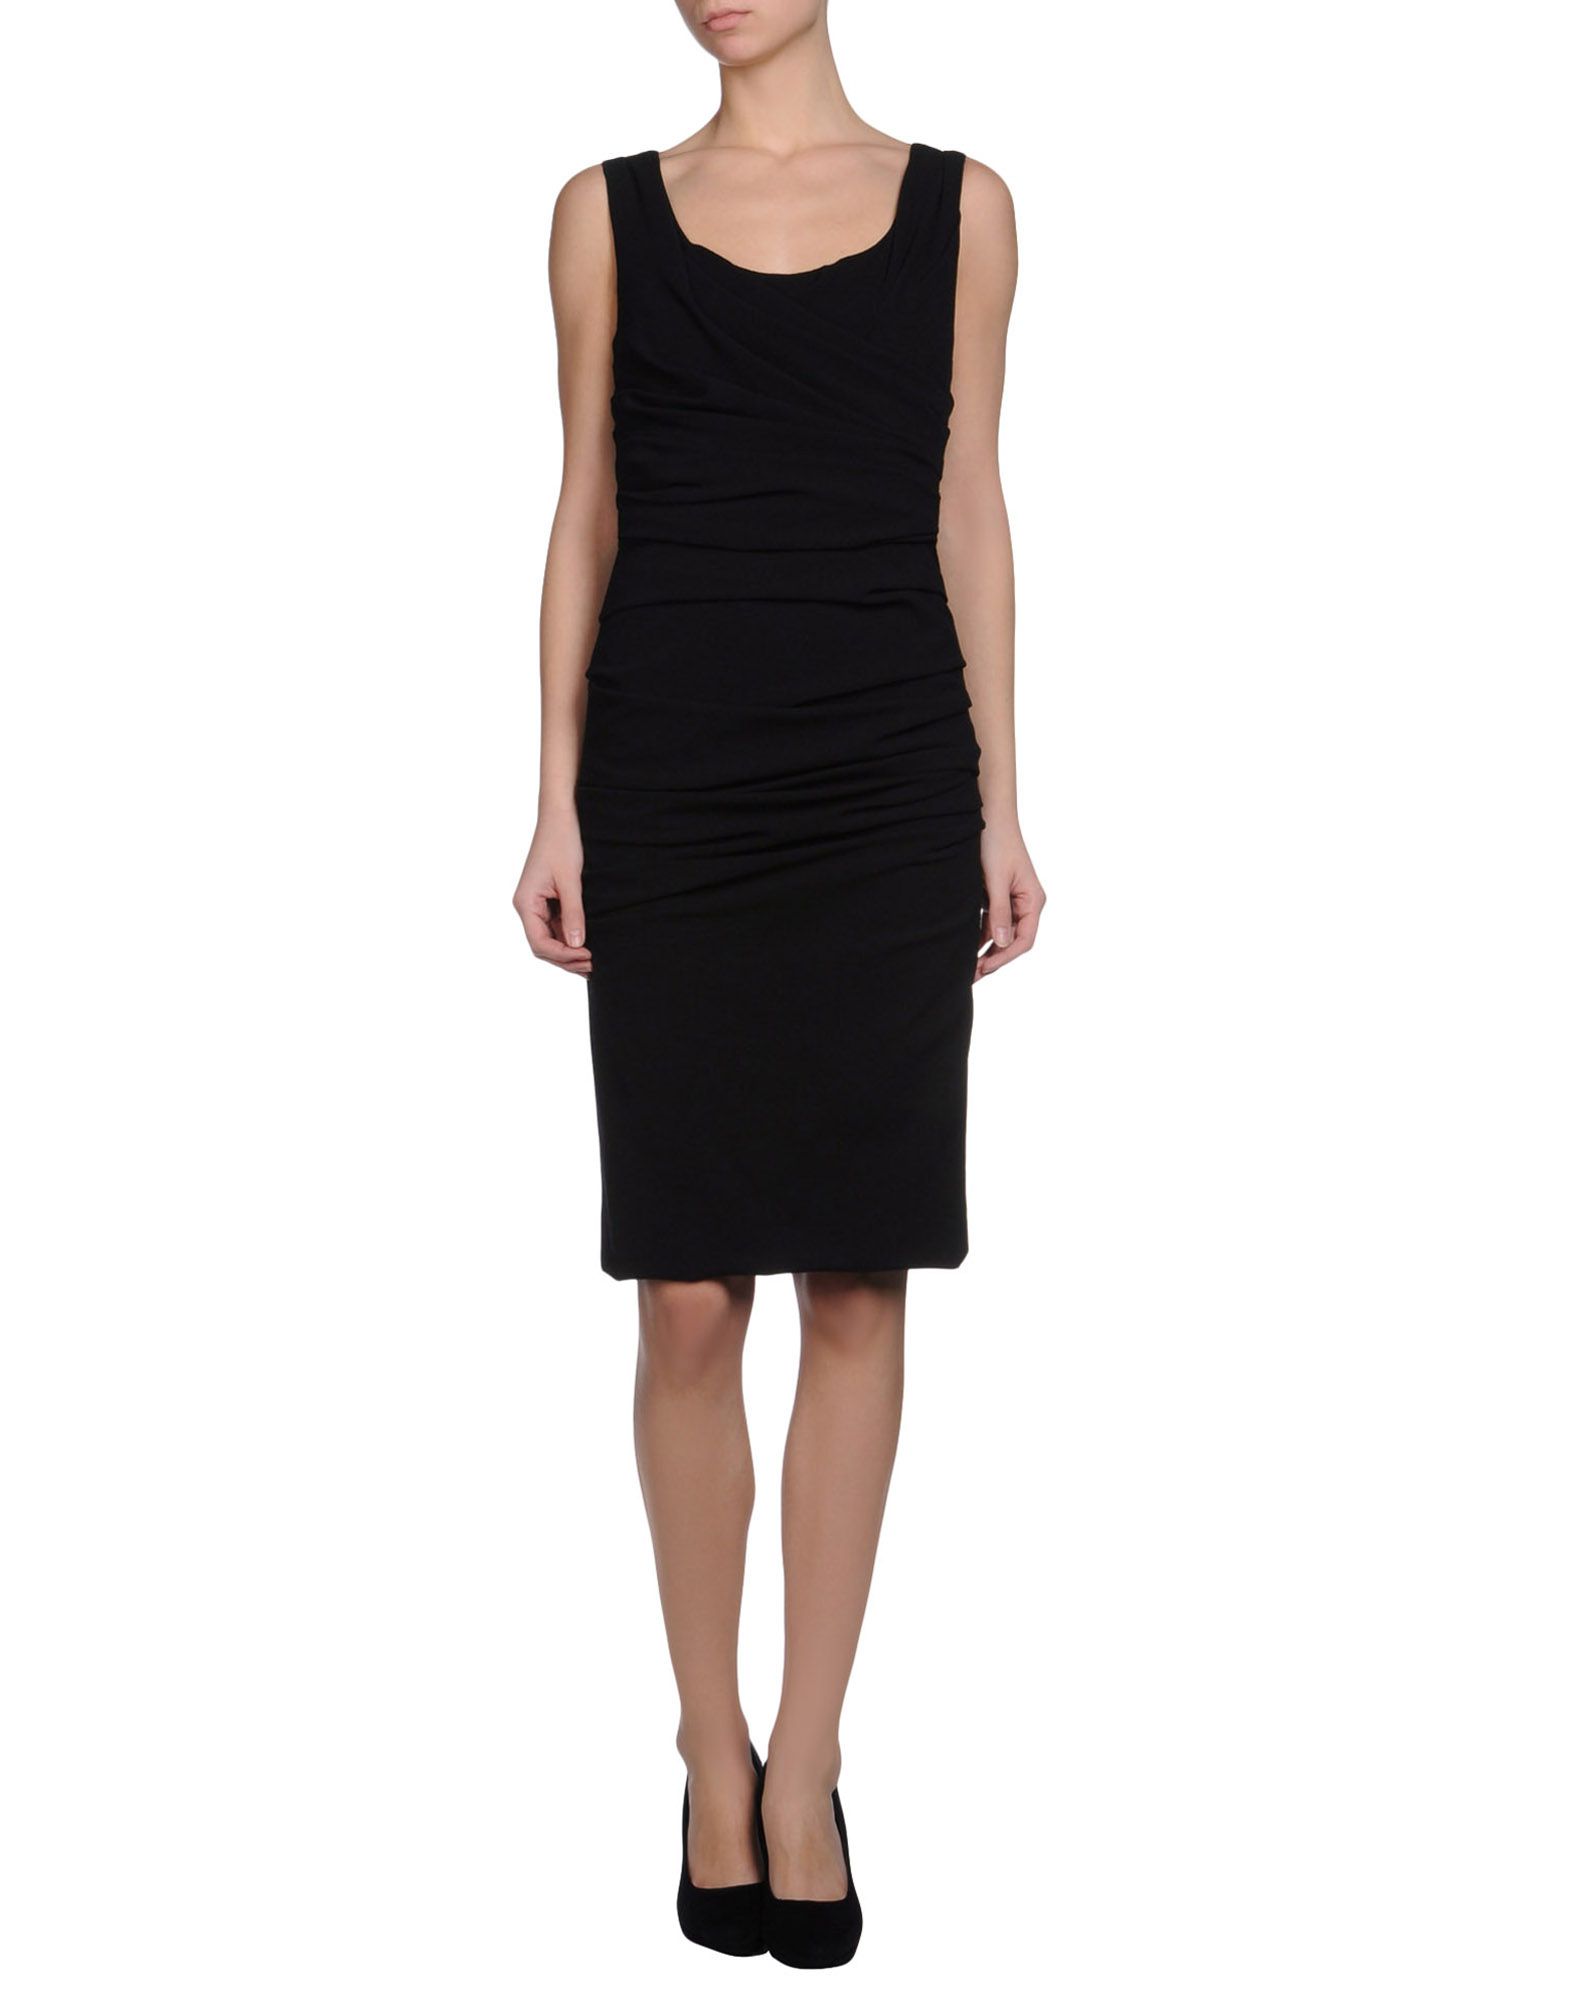 Lyst - Dolce & Gabbana Flared Hem Sleeveless Dress in Black